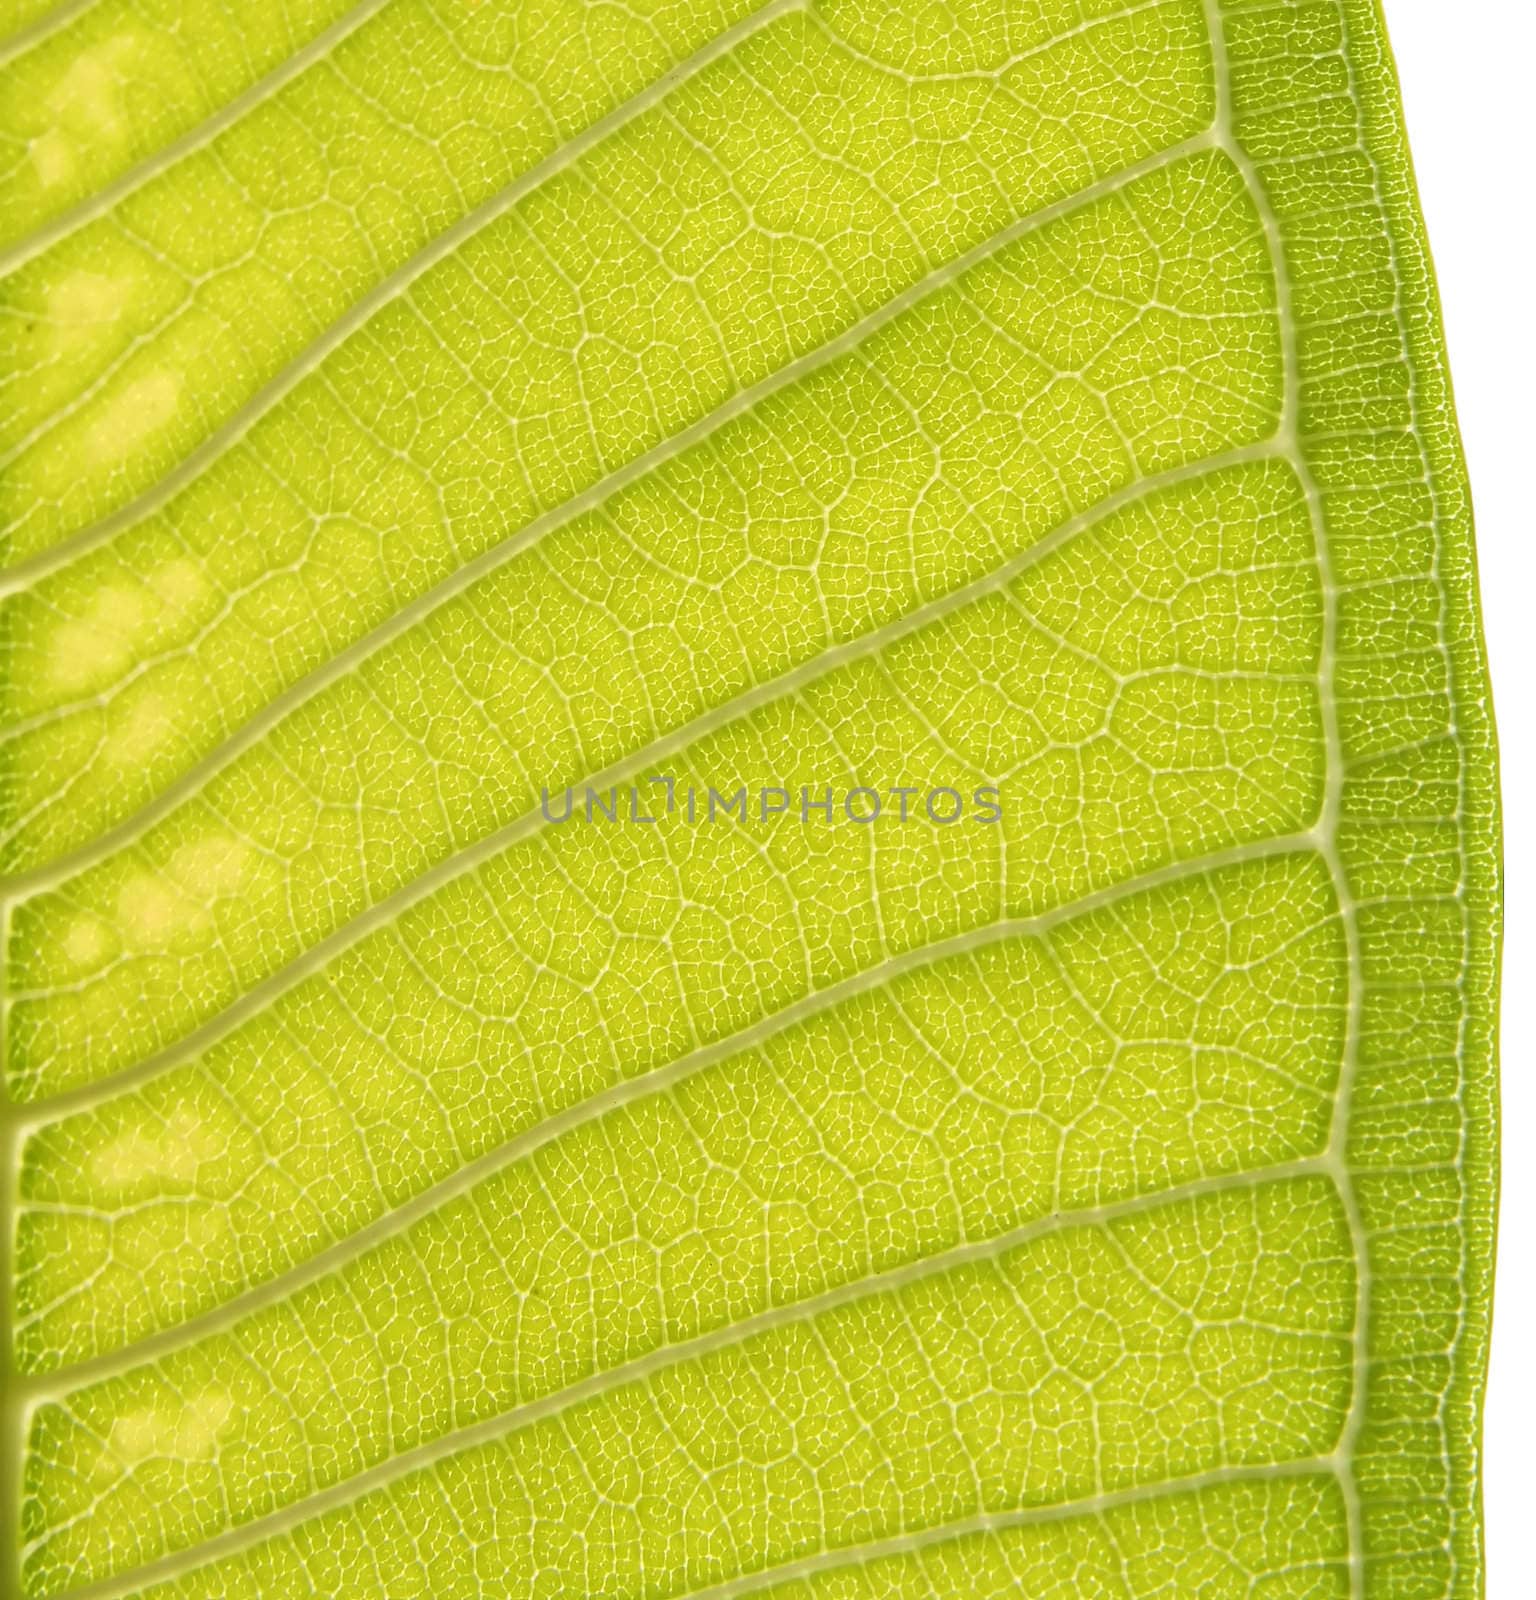 Plumeria Leaf, Closeup Leaf Texture
